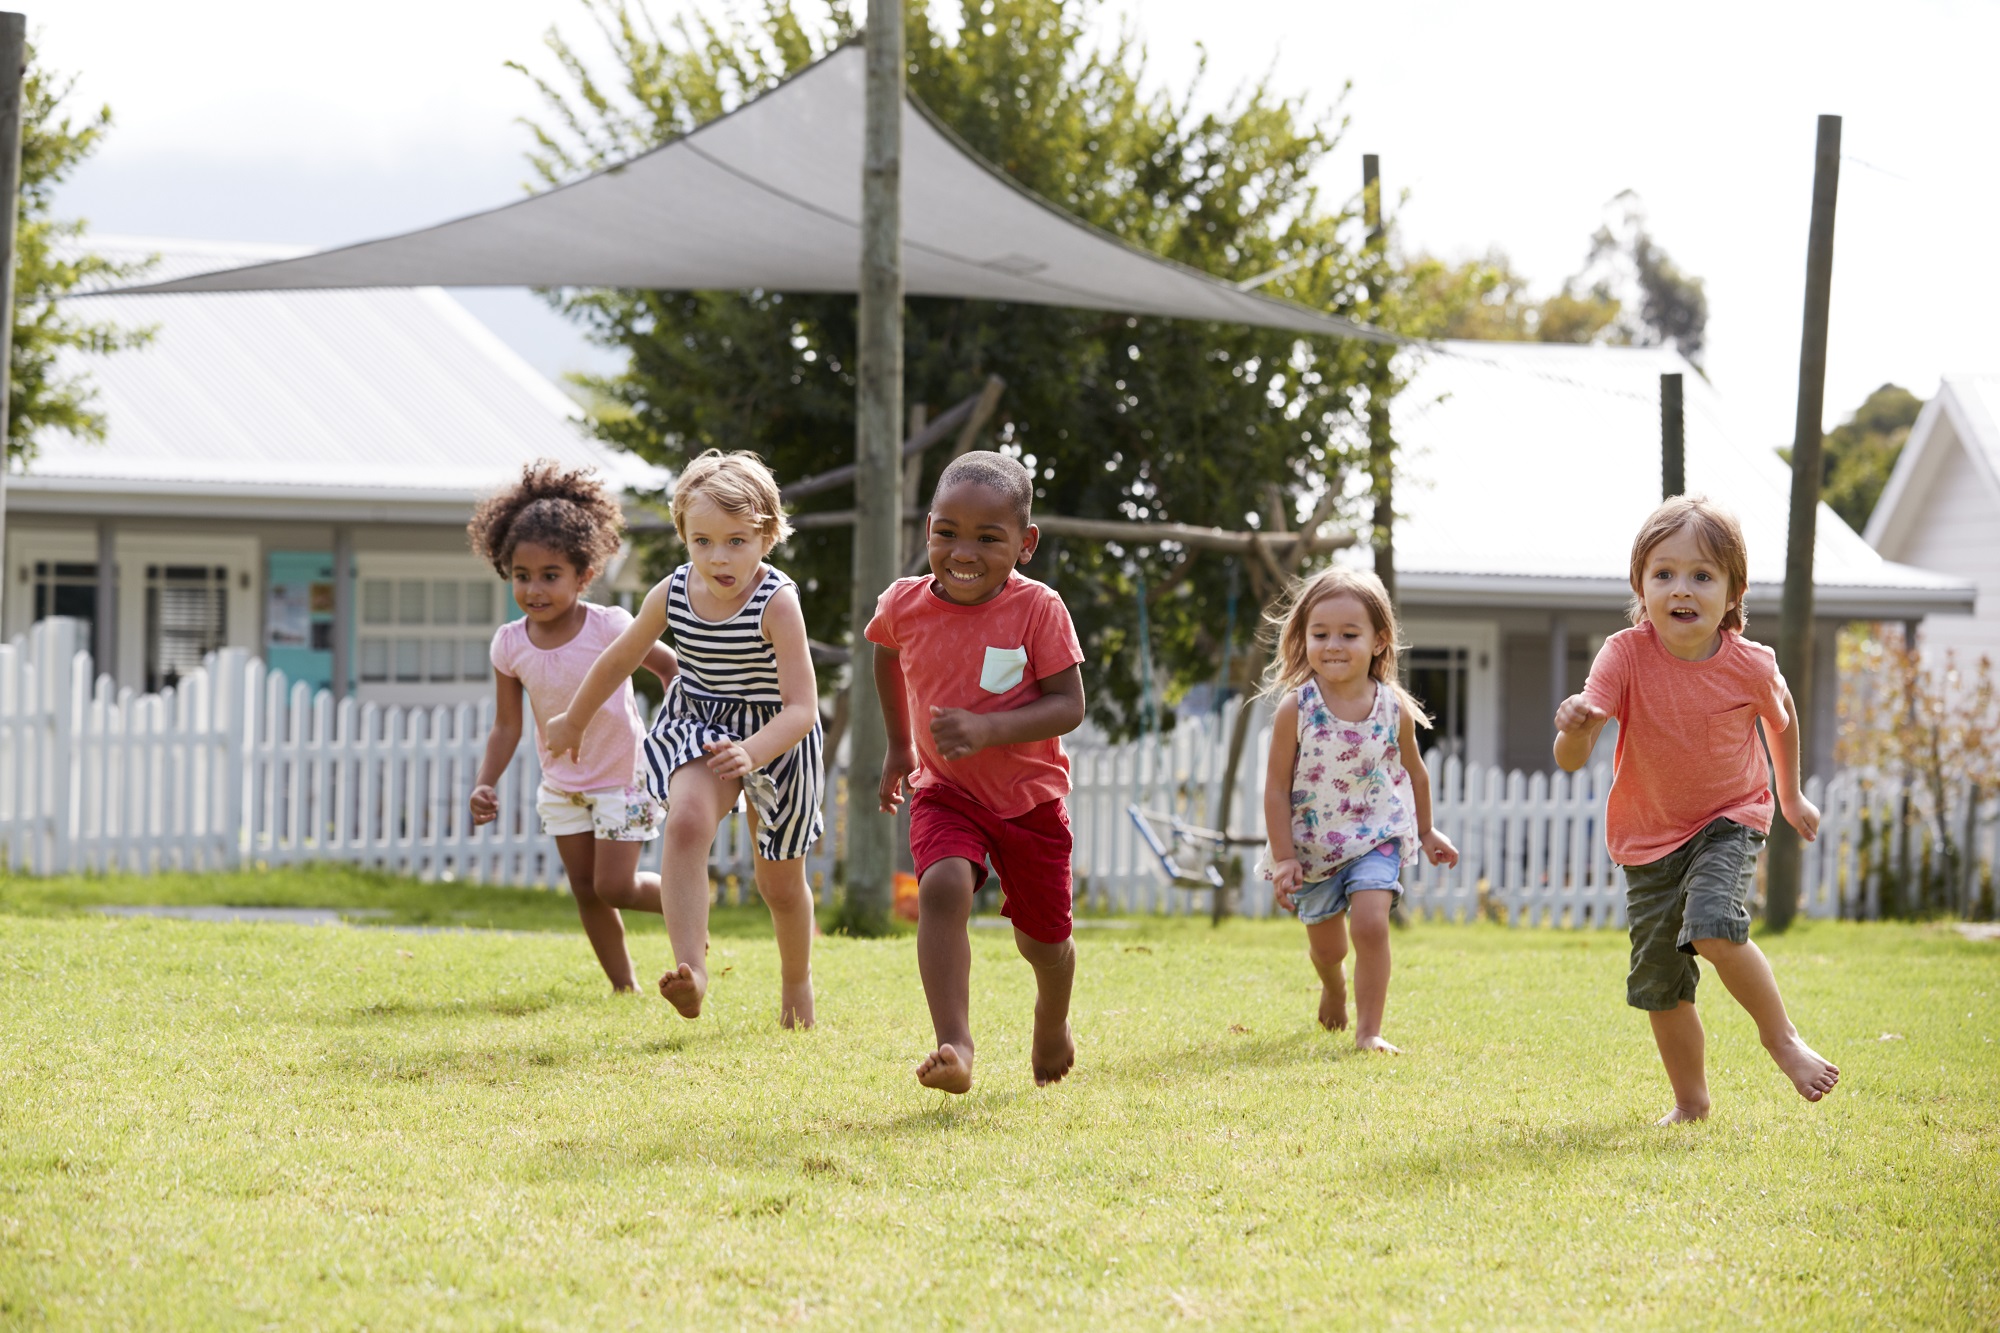 A group of preschool-aged kids running in a backyard